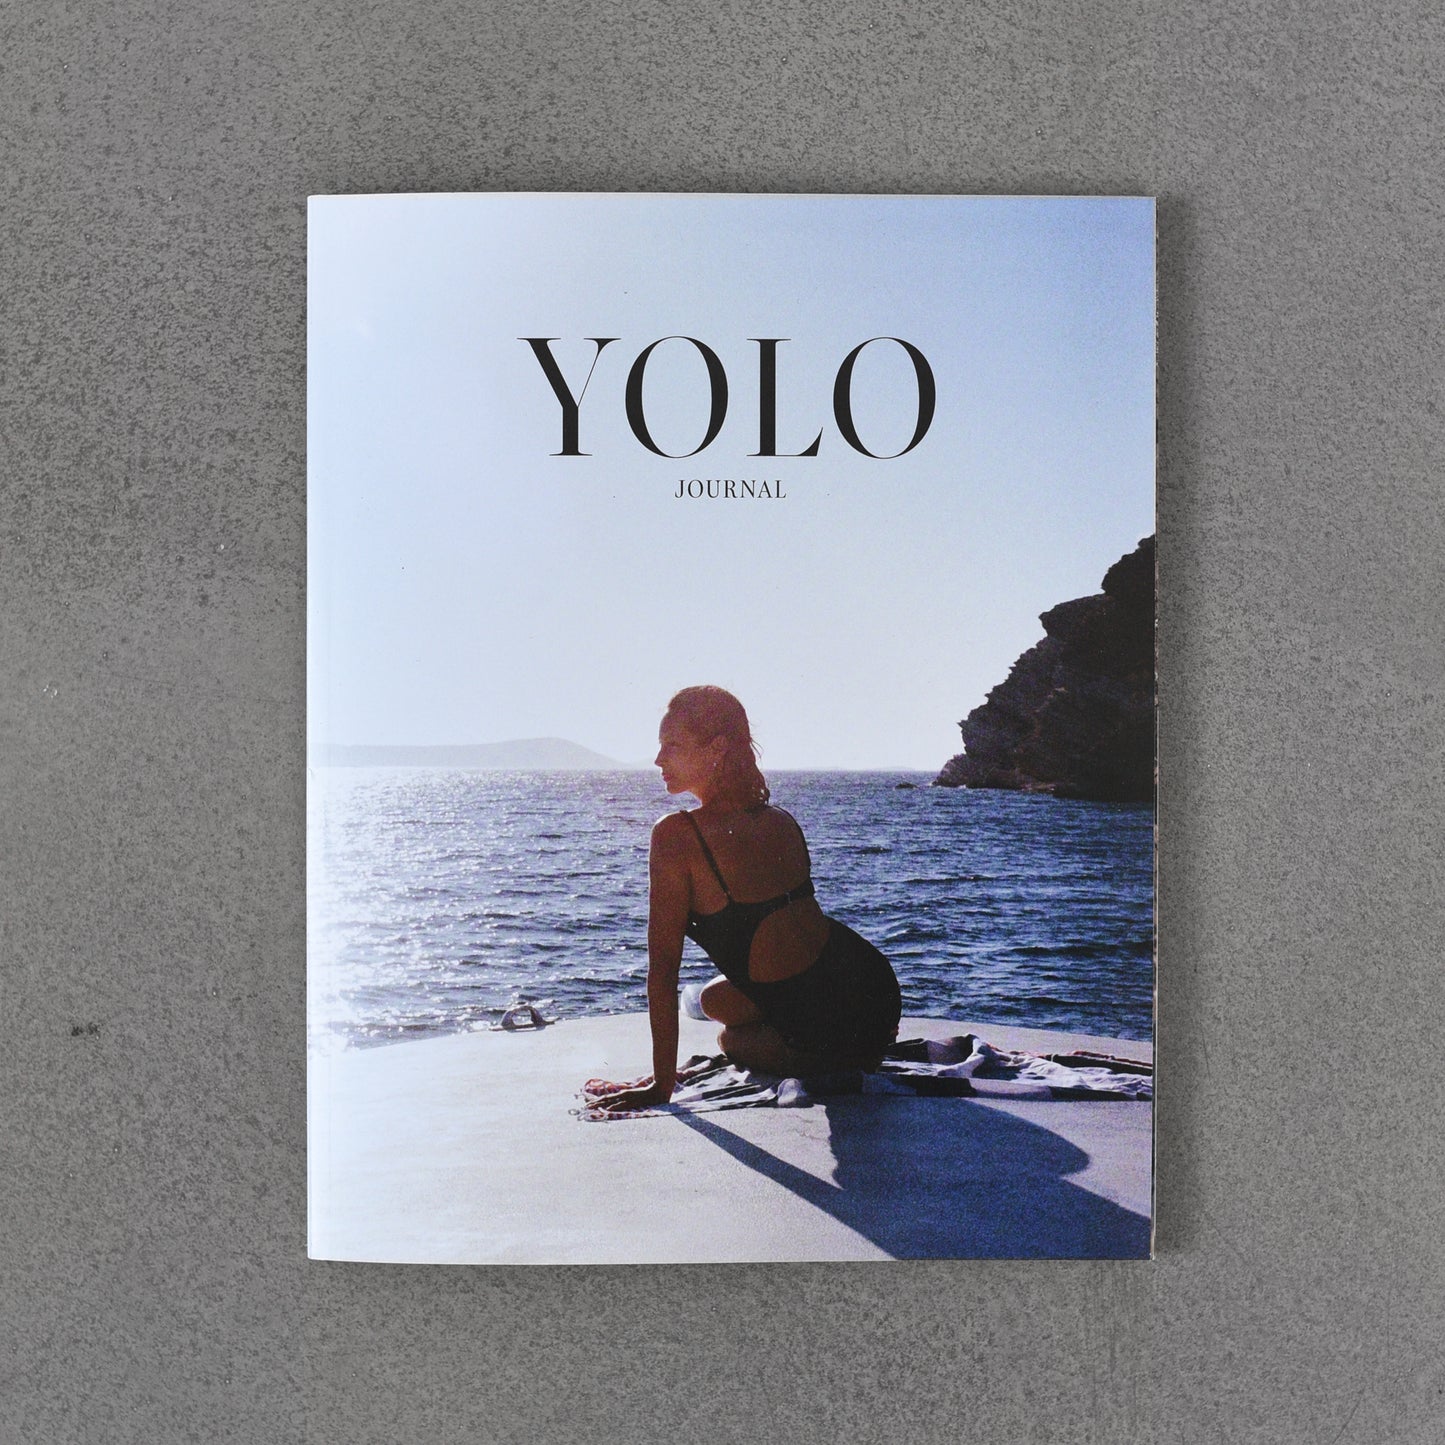 YOLO journal - Fall 2019